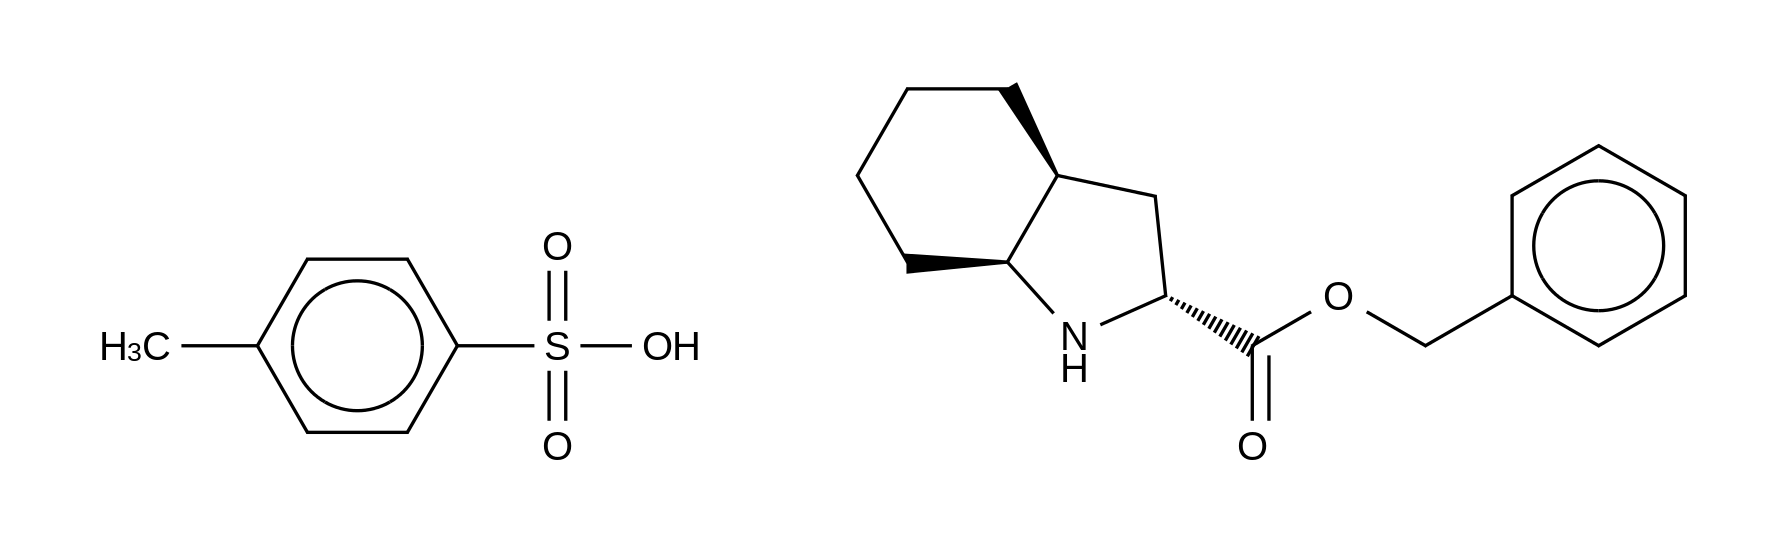 L-(2S,3aS,7aS)-Octahydro-1H-indole-2-carboxylic acid benzyl ester tosylate salt